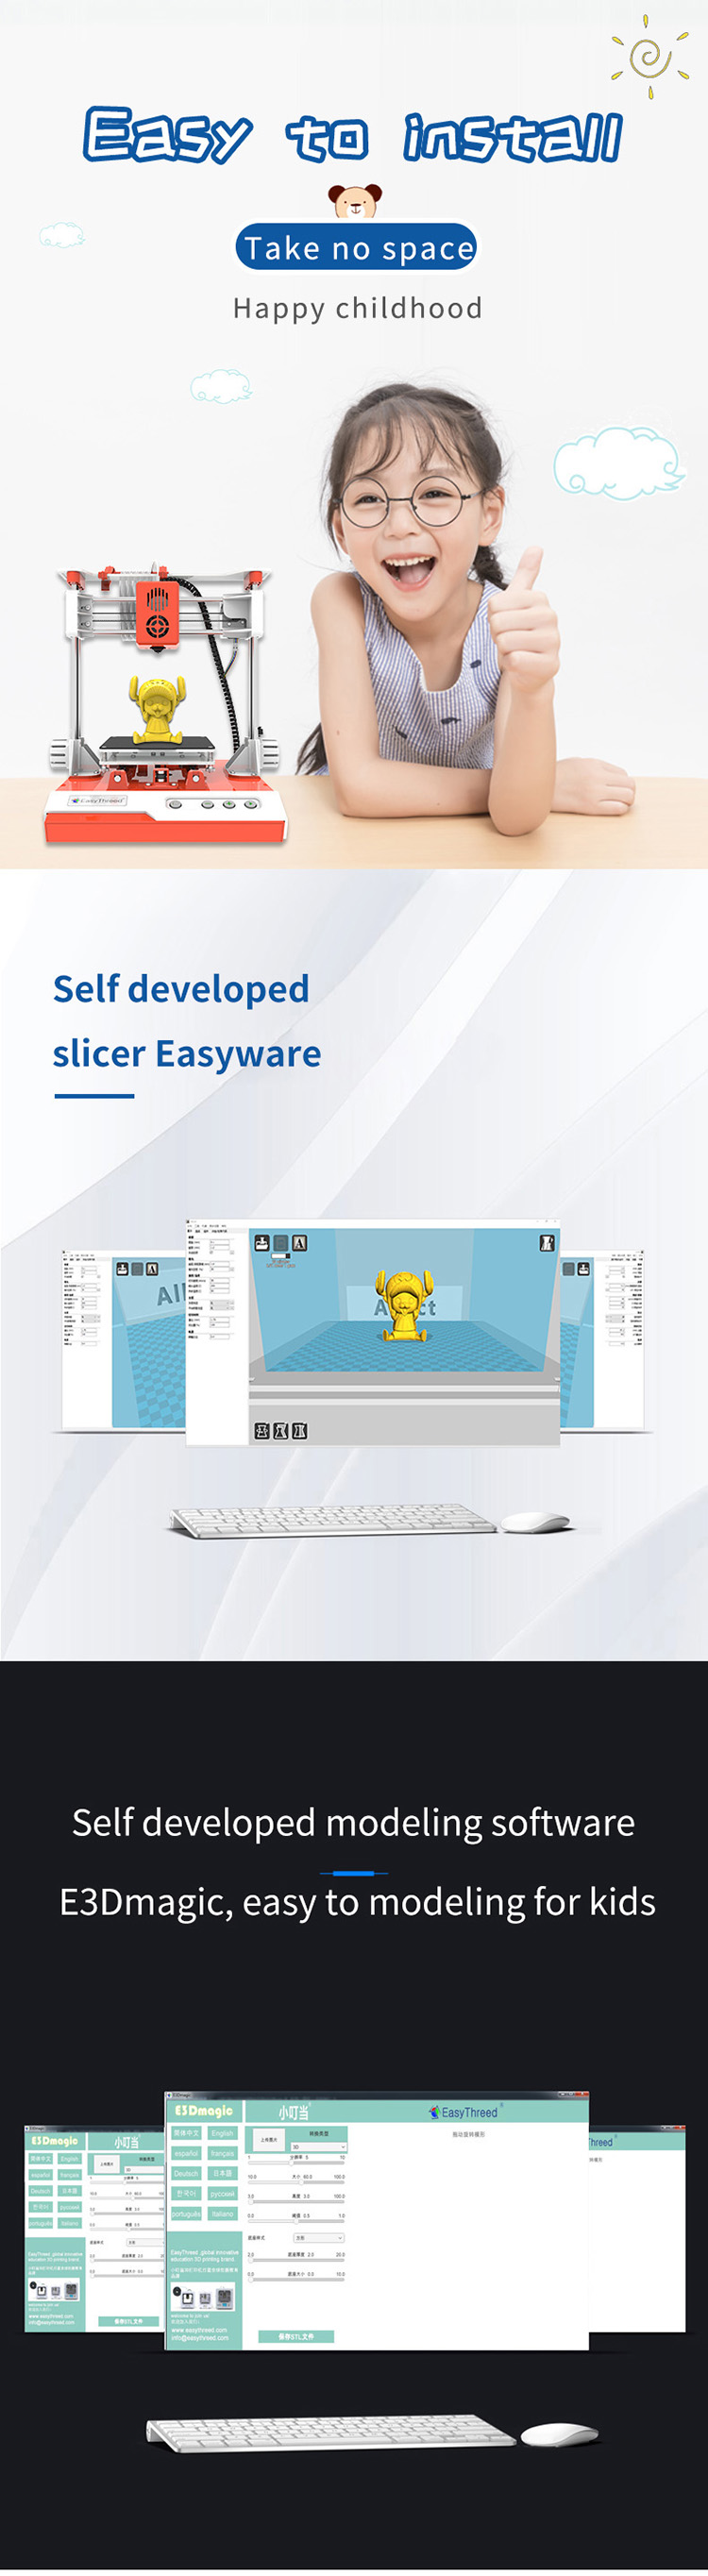 Easythreed® K1 Desktop Mini 3D Printer Kit 100X100X100mm Print Size Four Keys Control for Household Education & Students